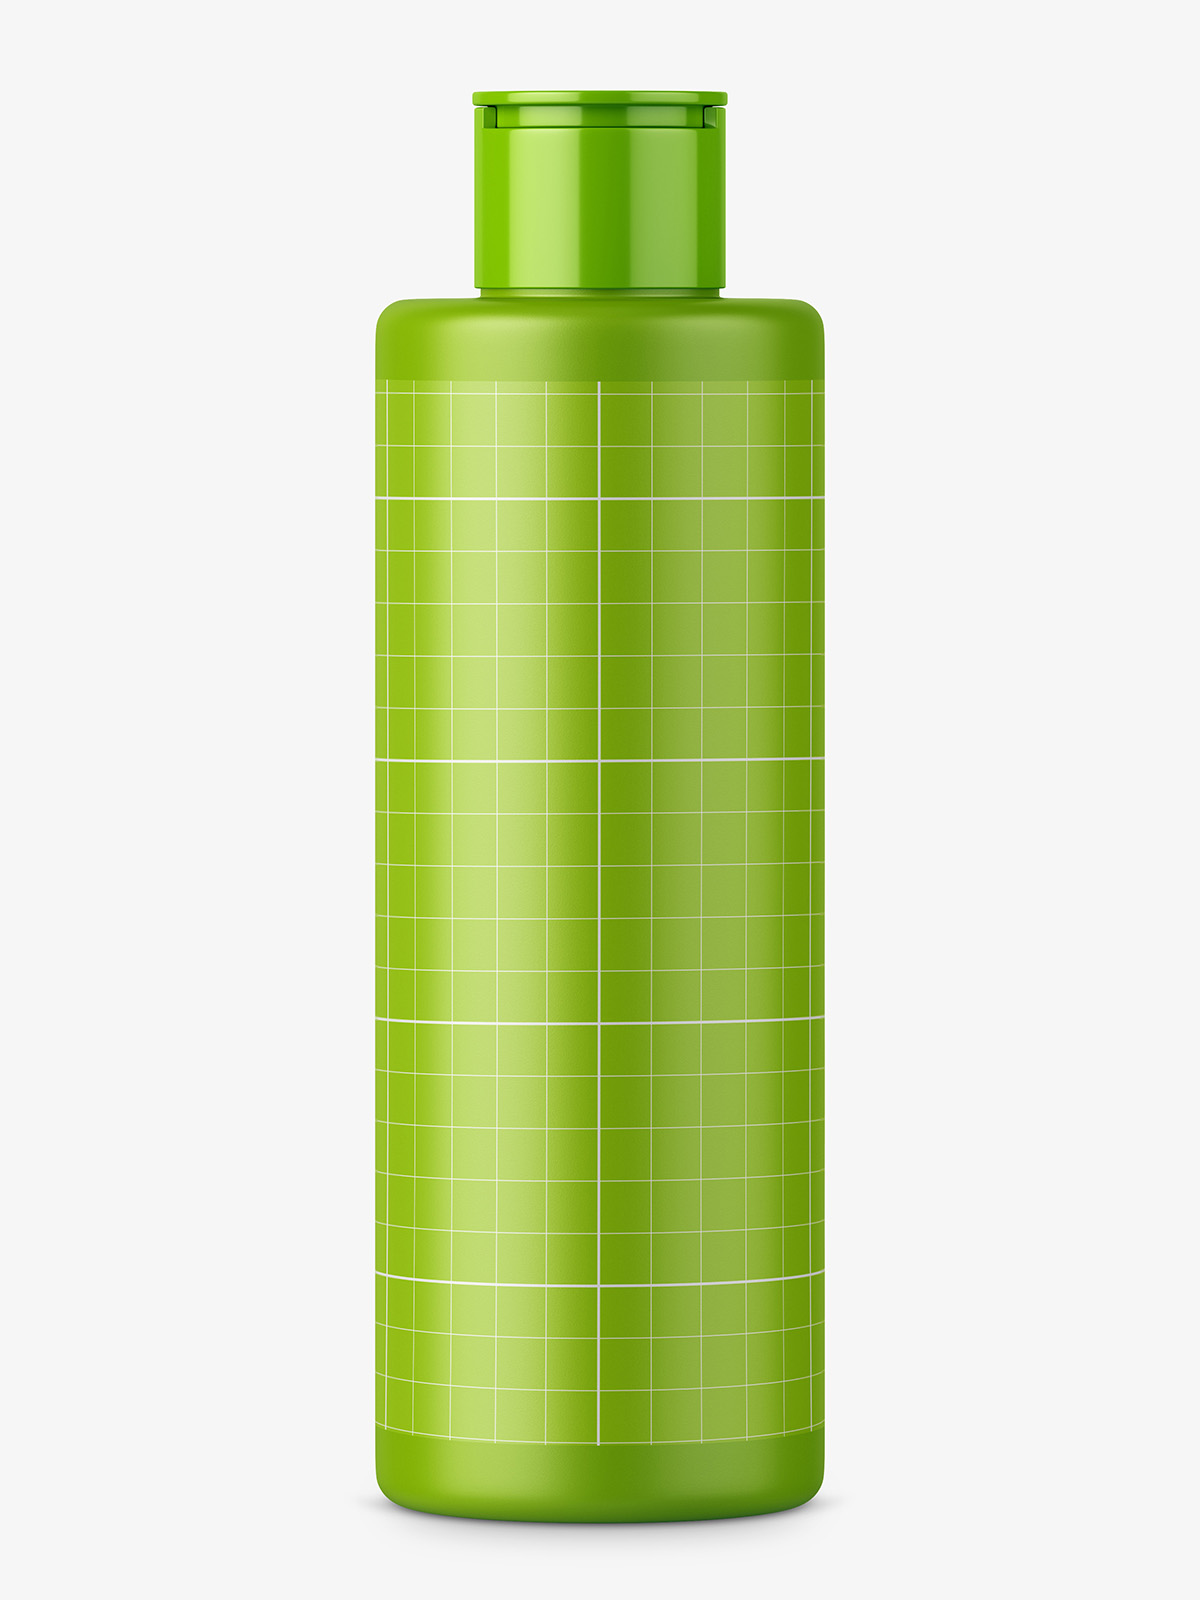 Plastic cosmetic oil bottle mockup - Smarty Mockups